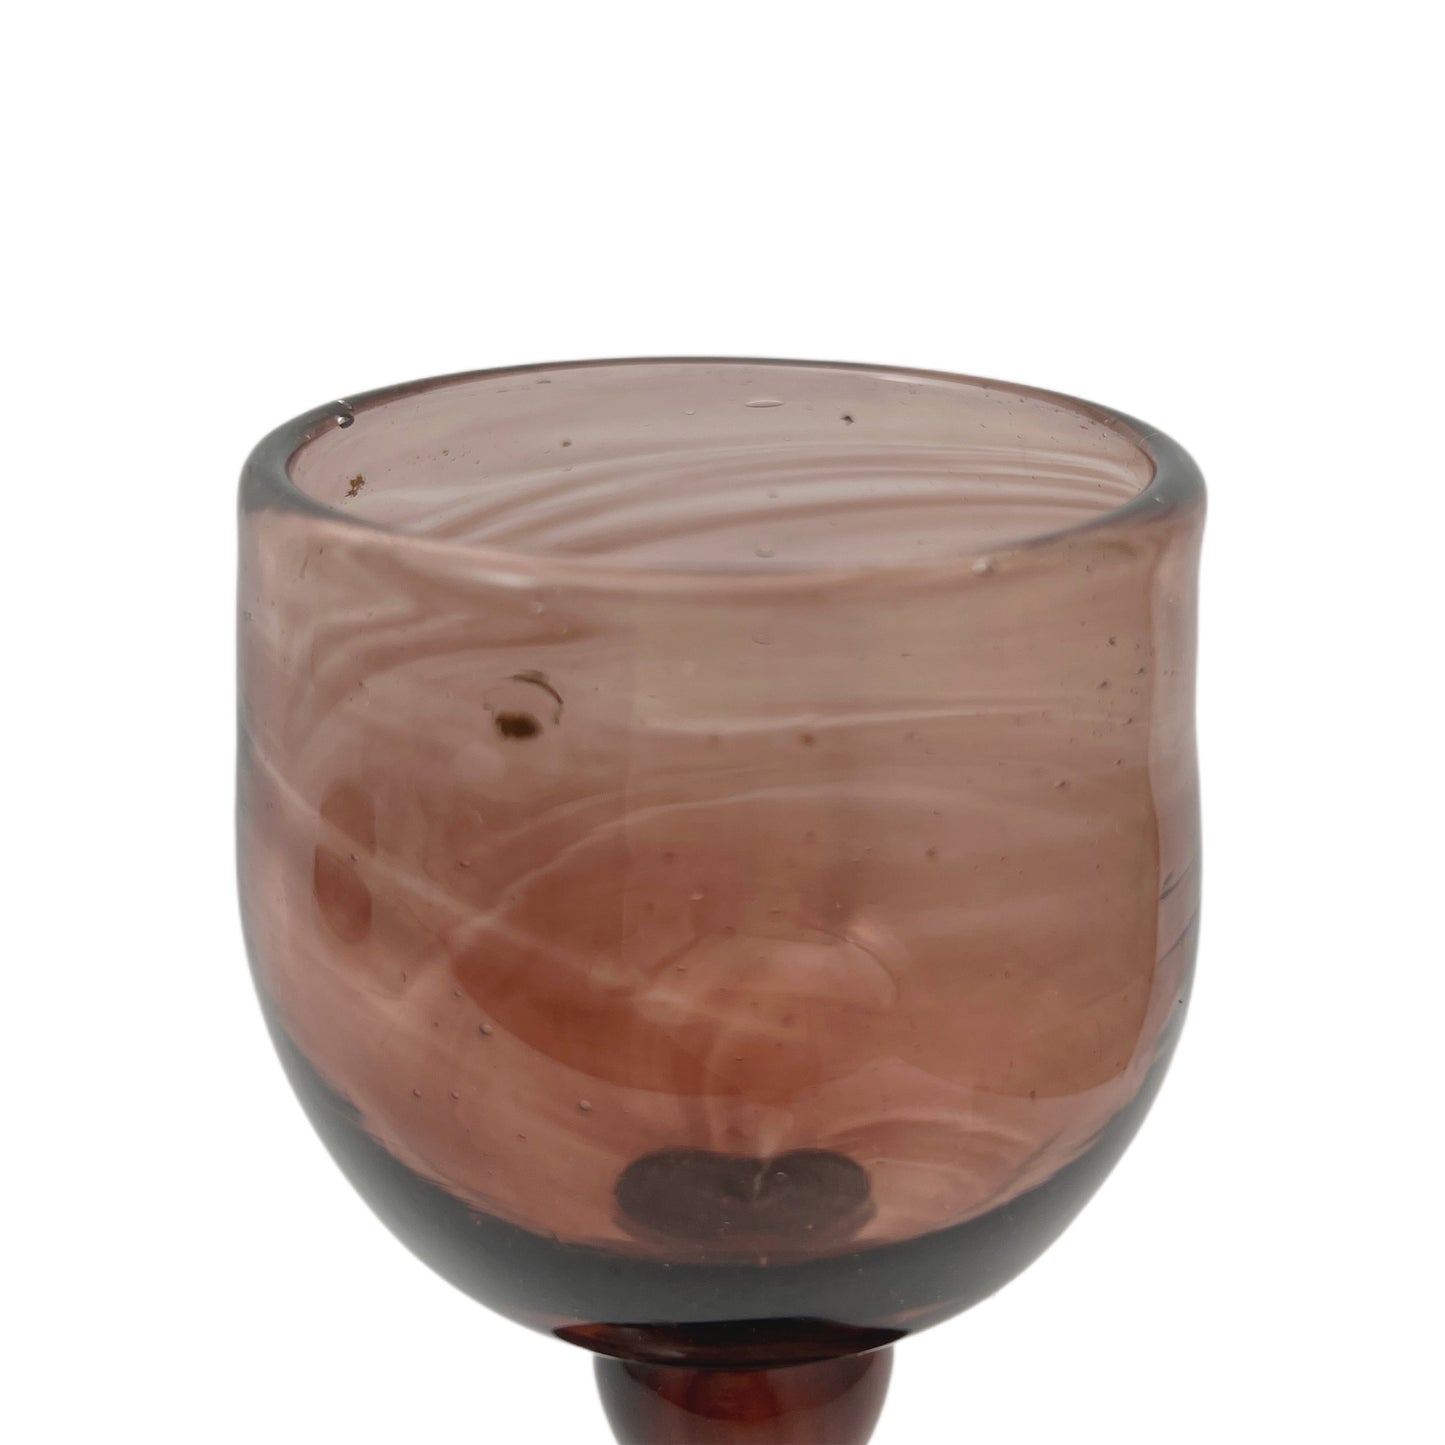 【La Soufflerie】ワイングラス Red Wine Glass Framboise